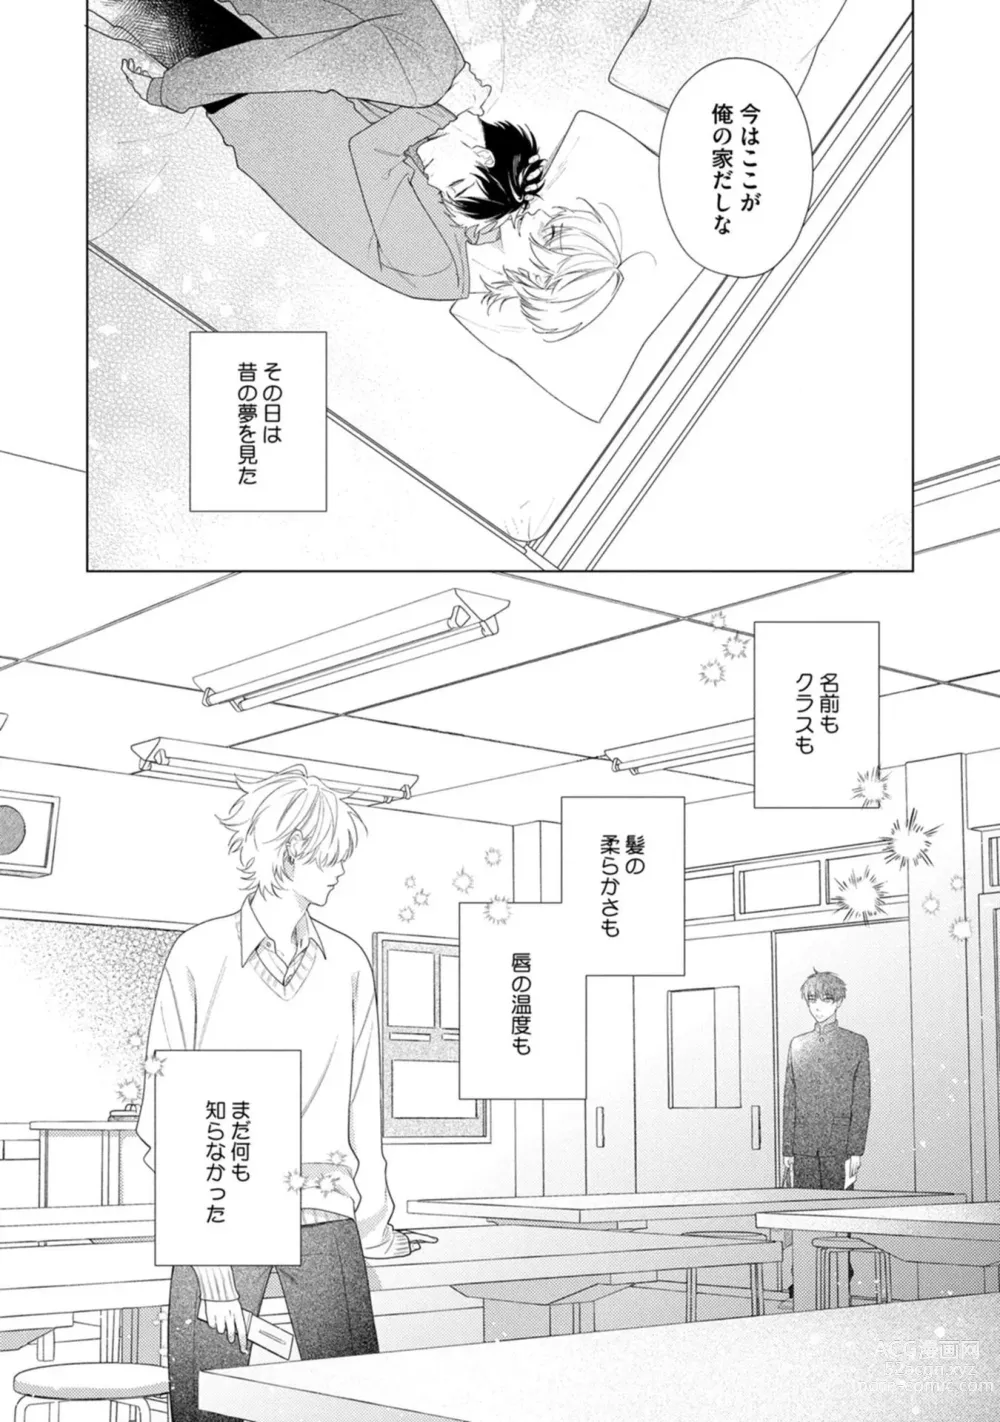 Page 14 of manga Yoru mo, Asa mo